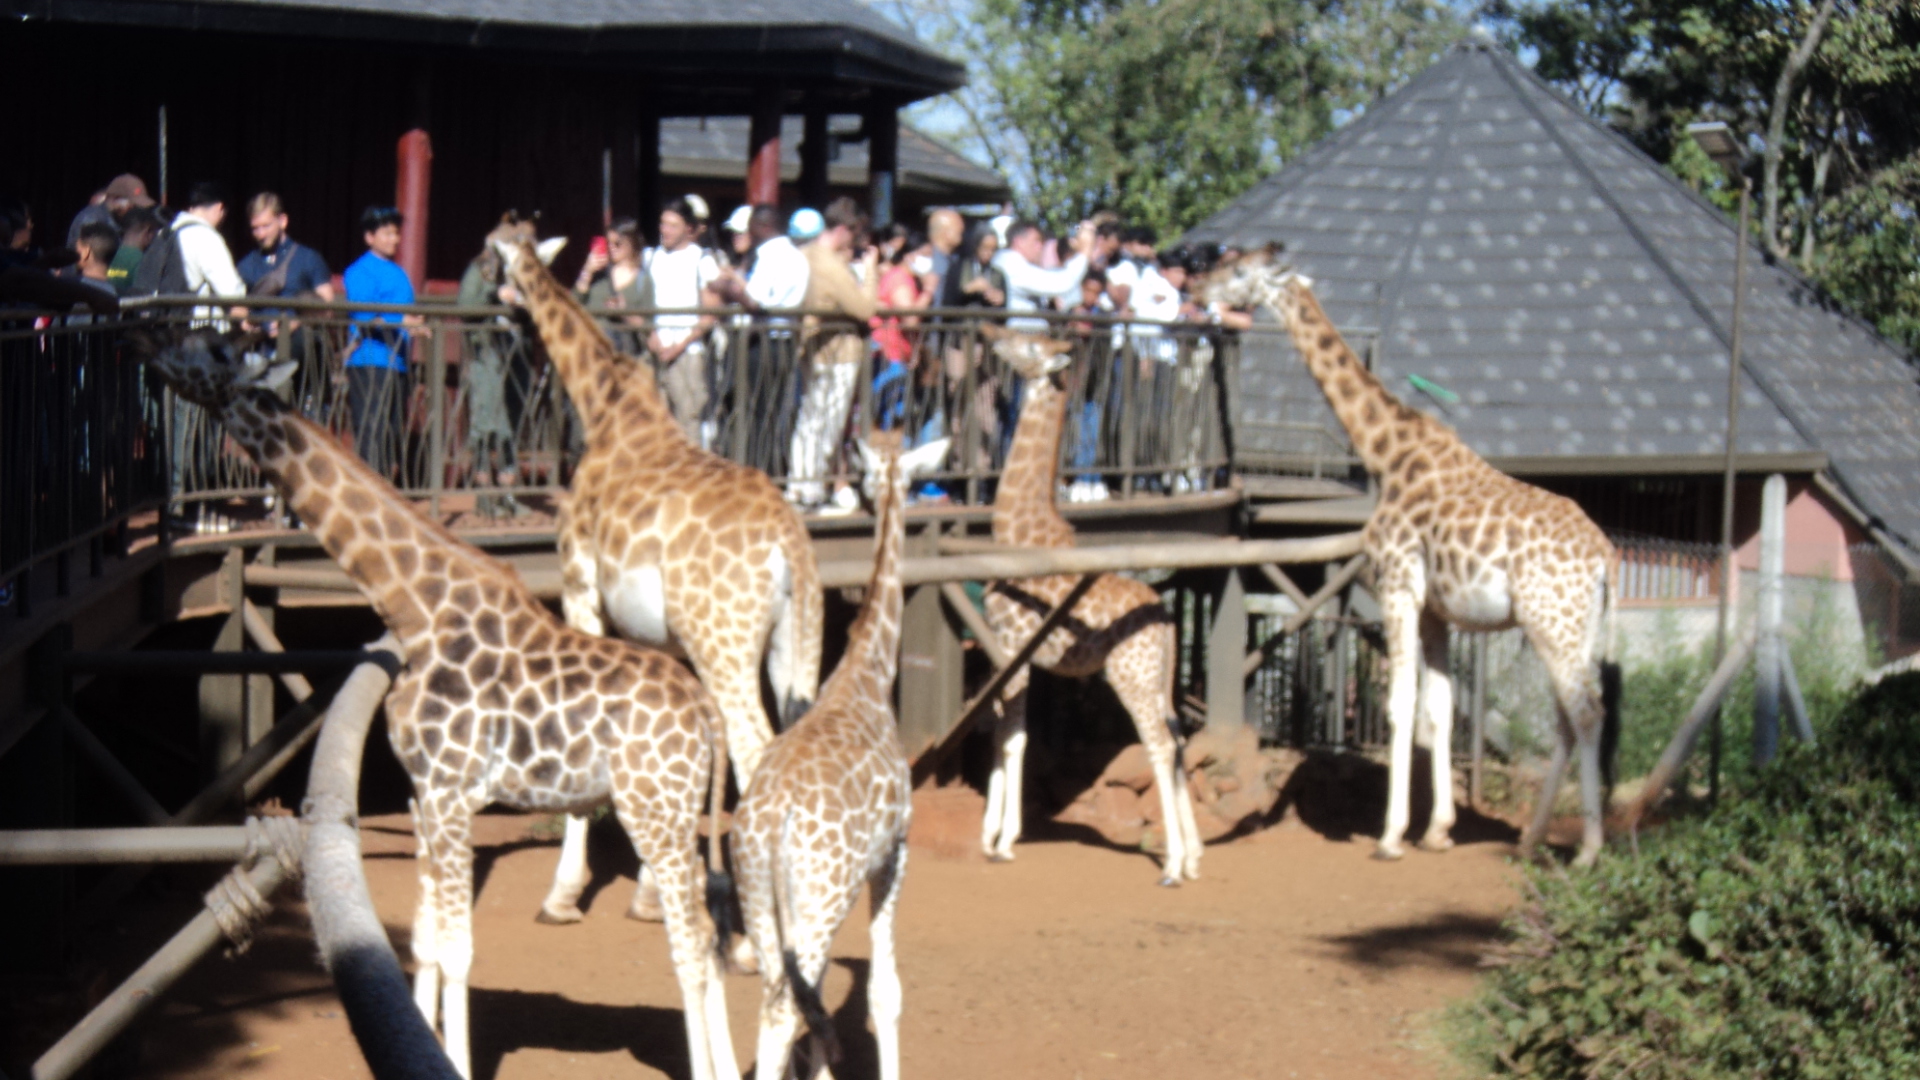 Karen Blixen and Giraffe Center Half Day Tour